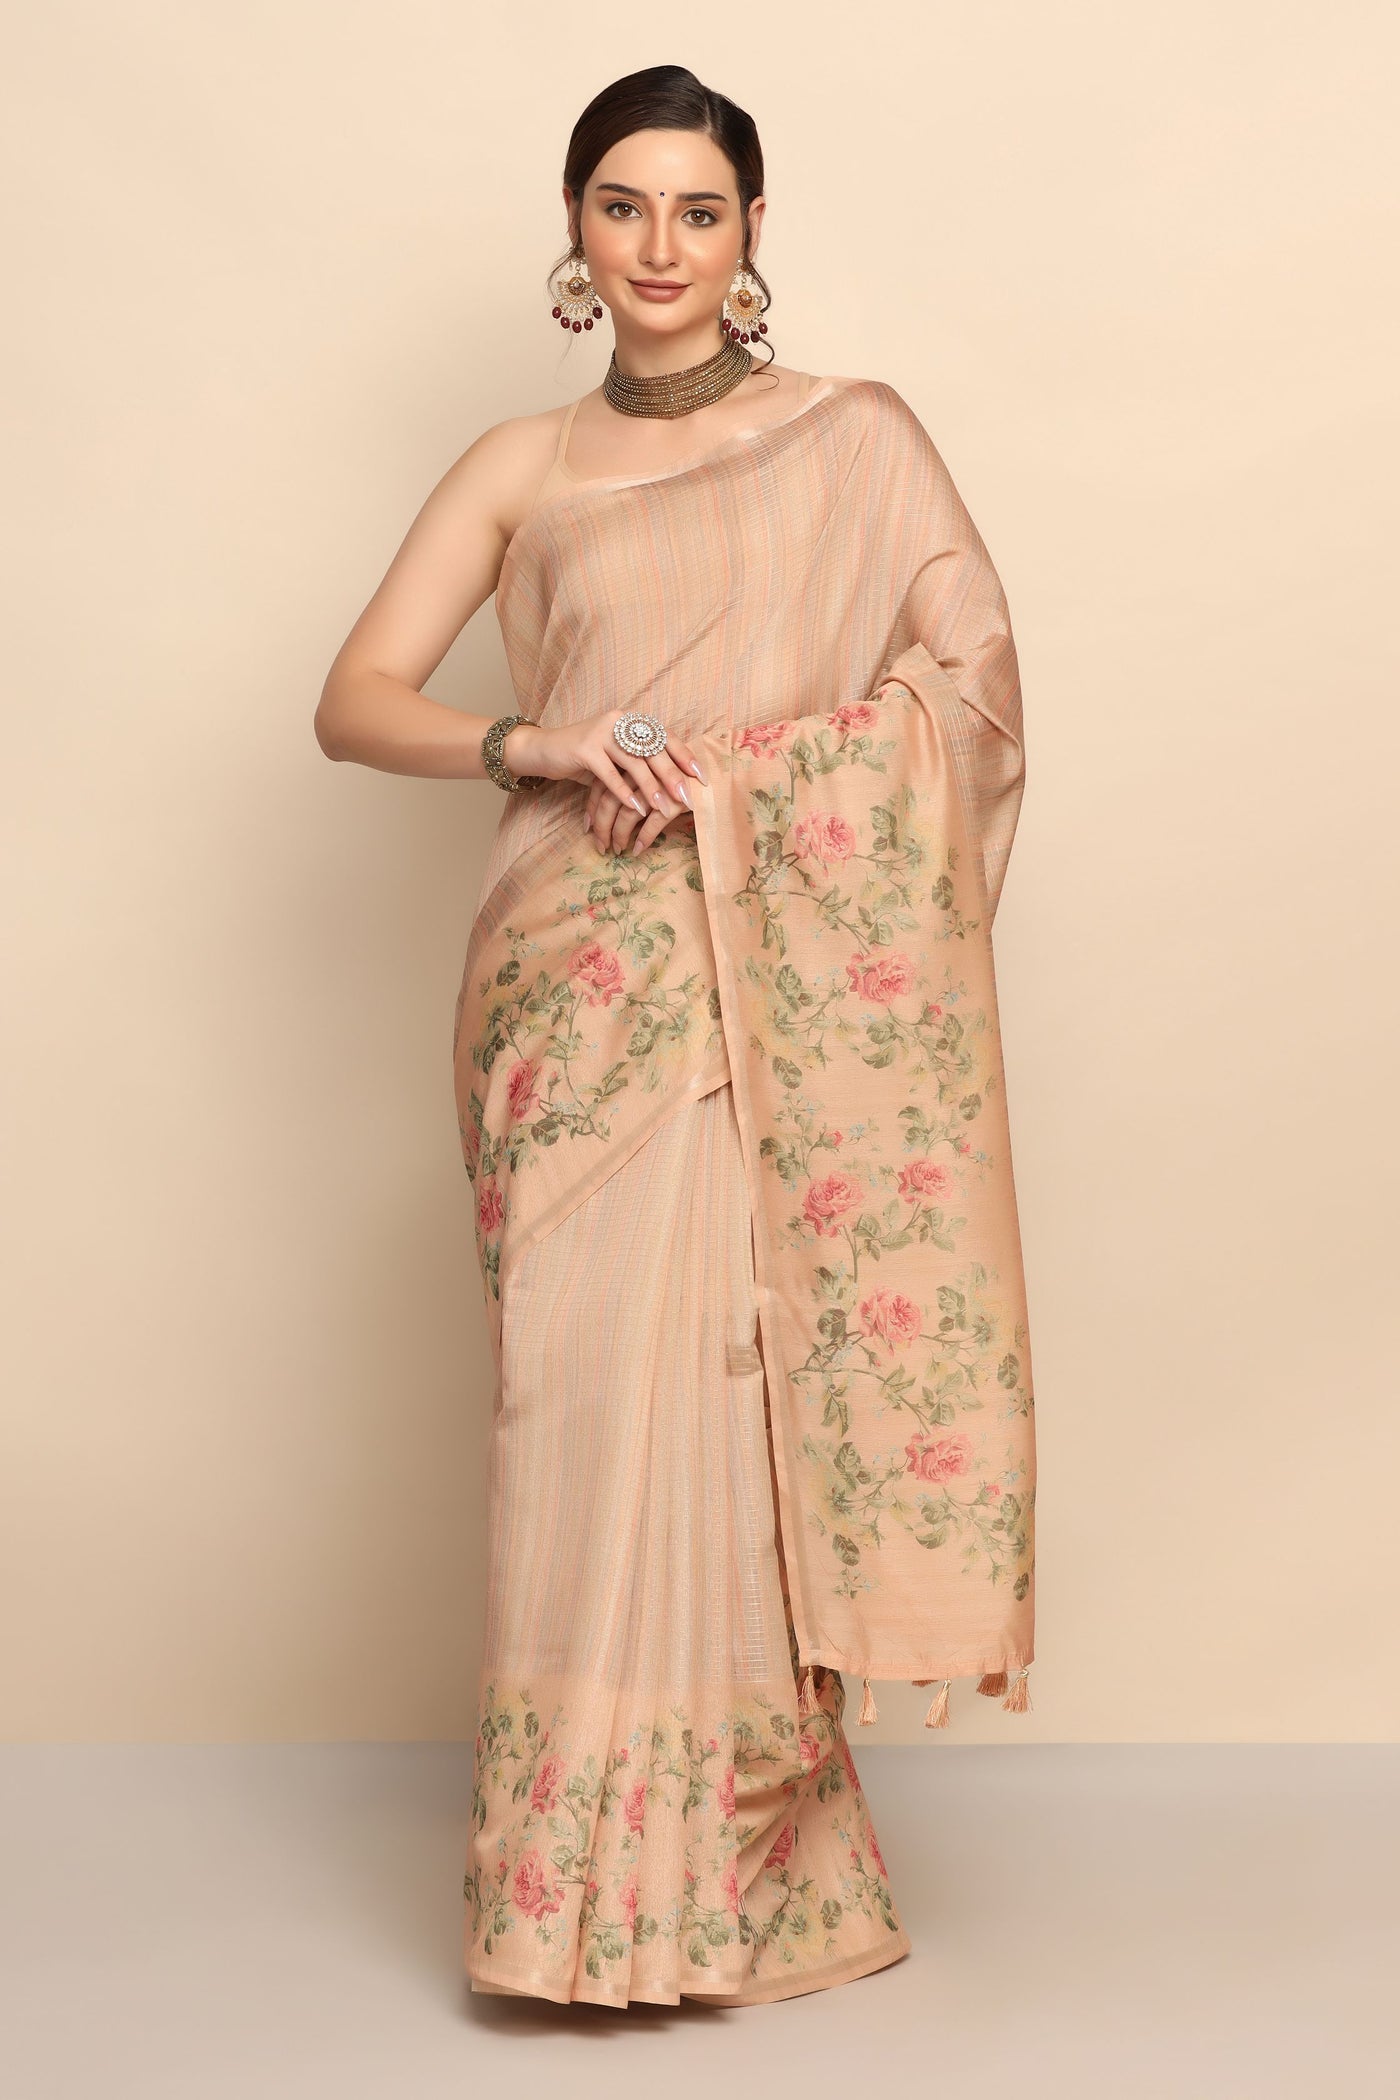 Stunning Peach Silk Saree with Exquisite Floral Motif